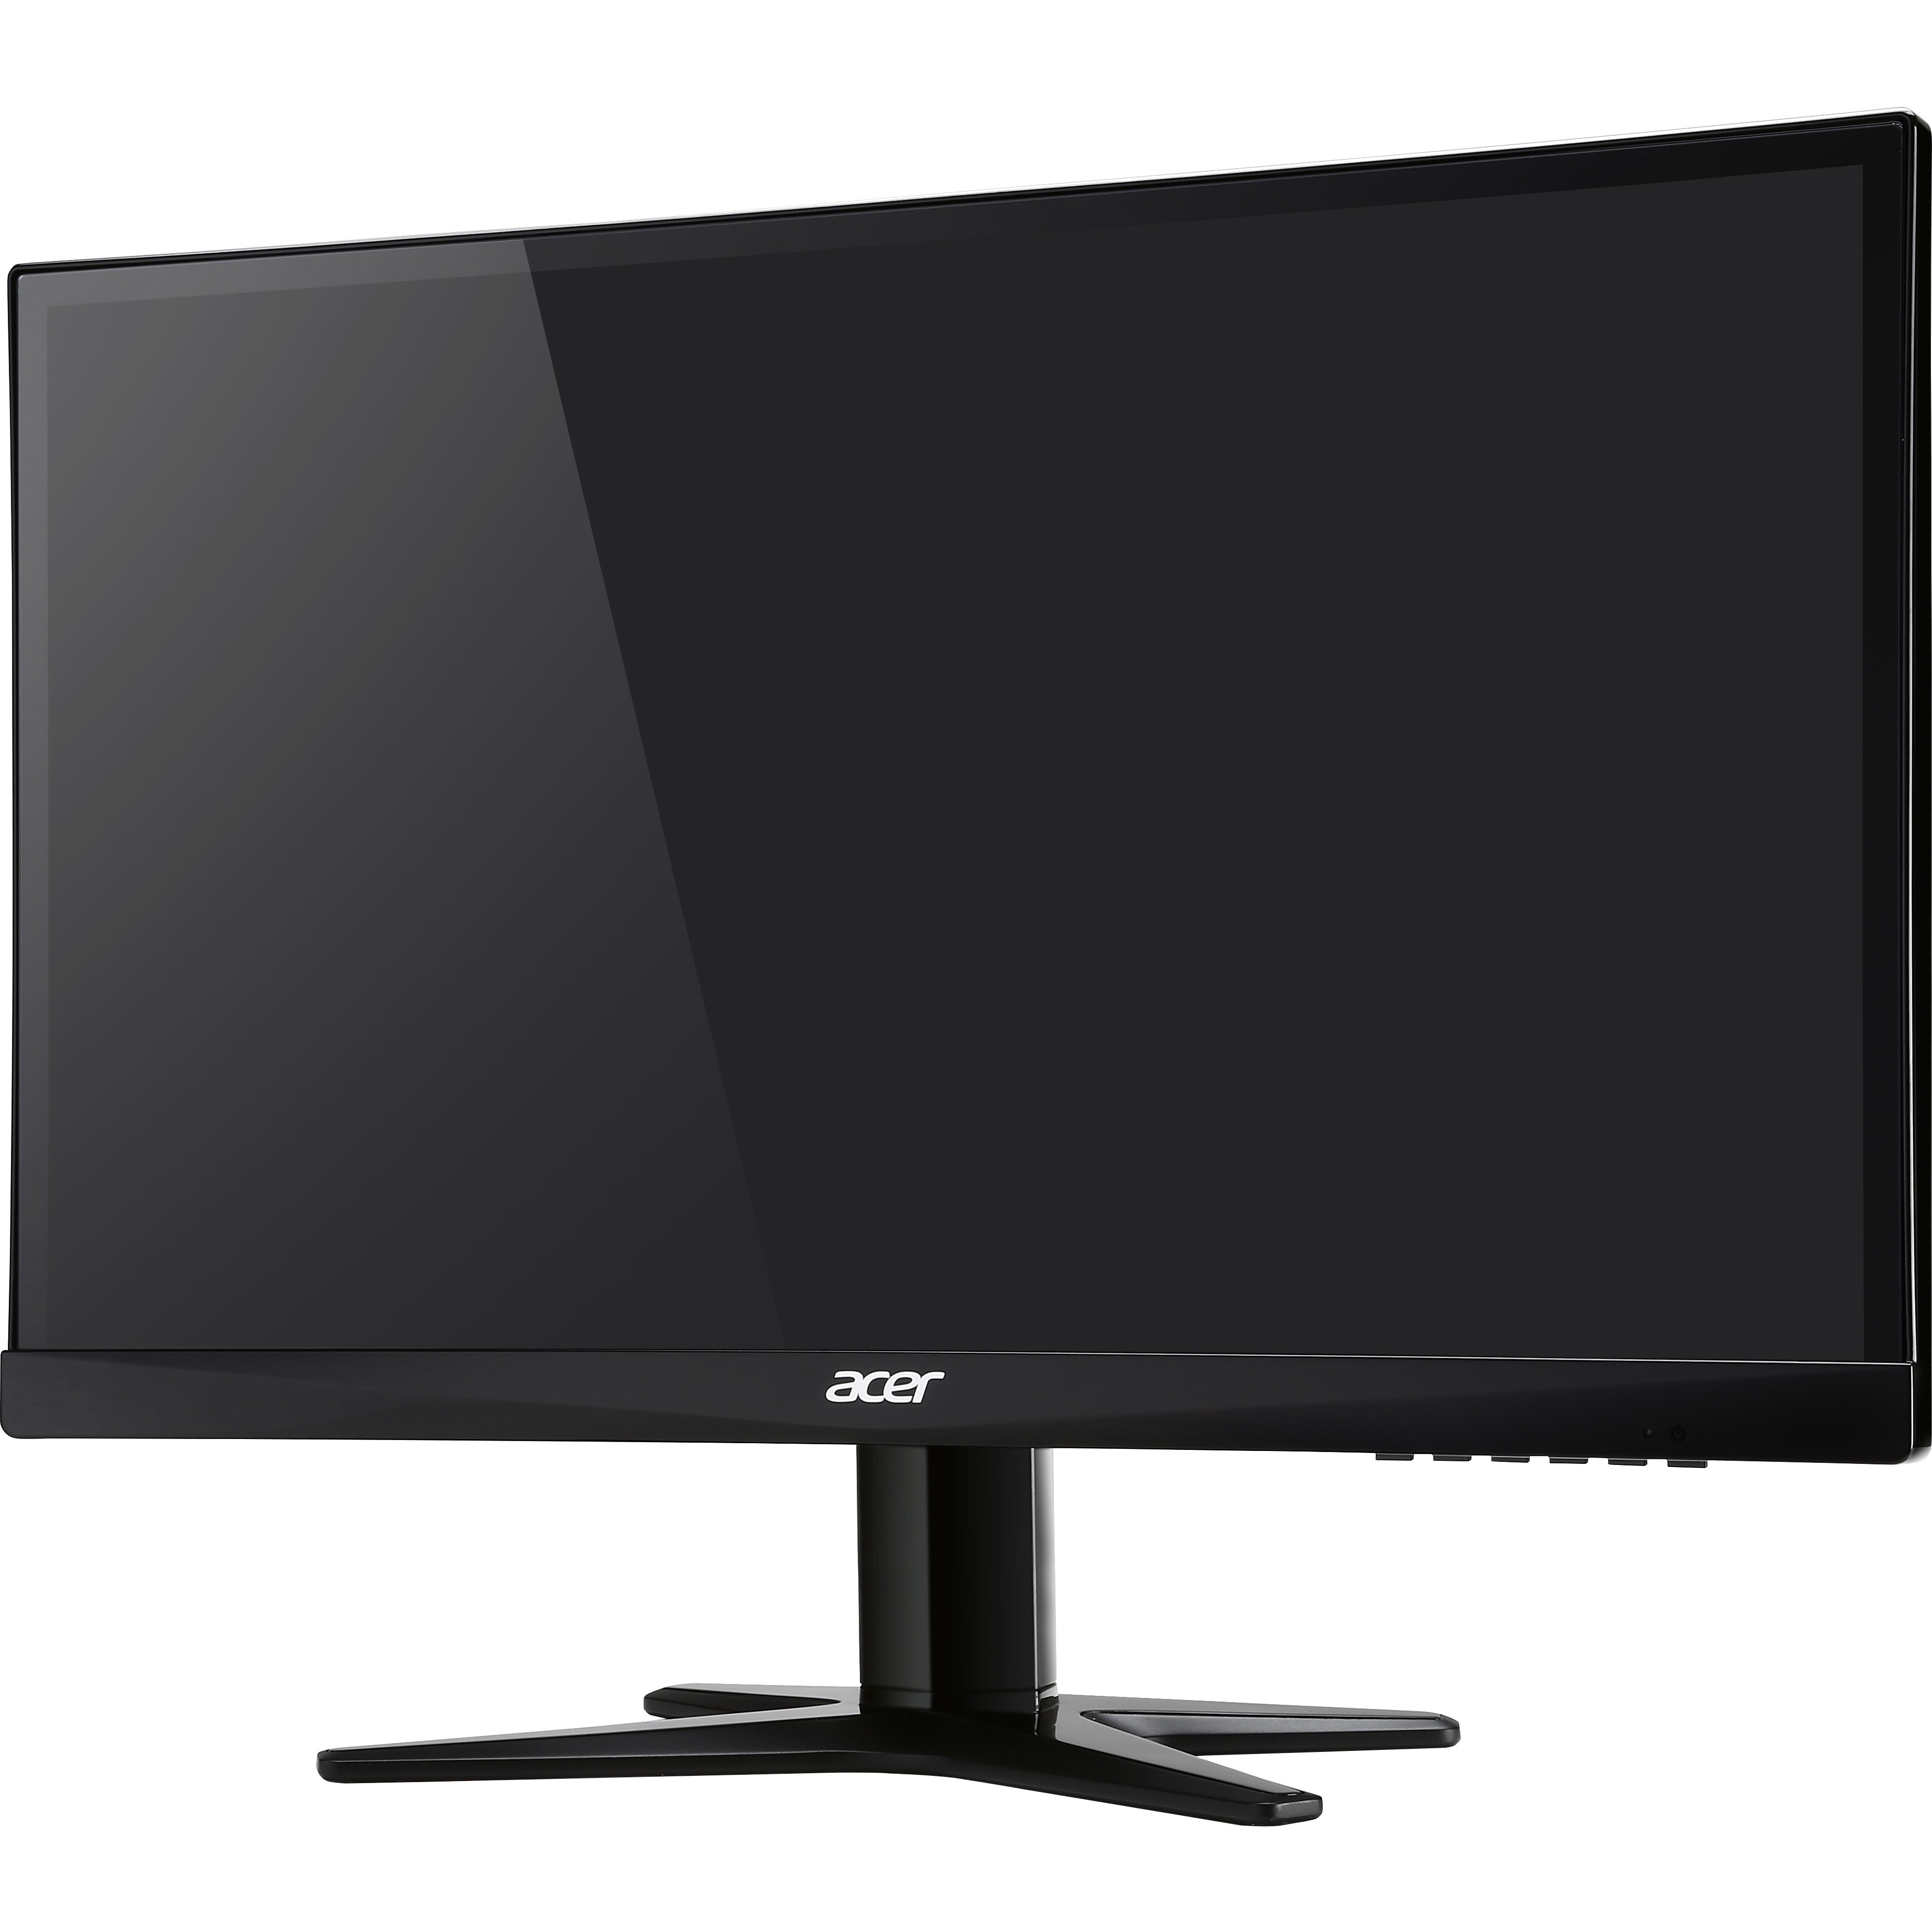 Acer G247HYL 23.8" Full HD LED LCD Monitor - 16:9 - Black - image 2 of 5